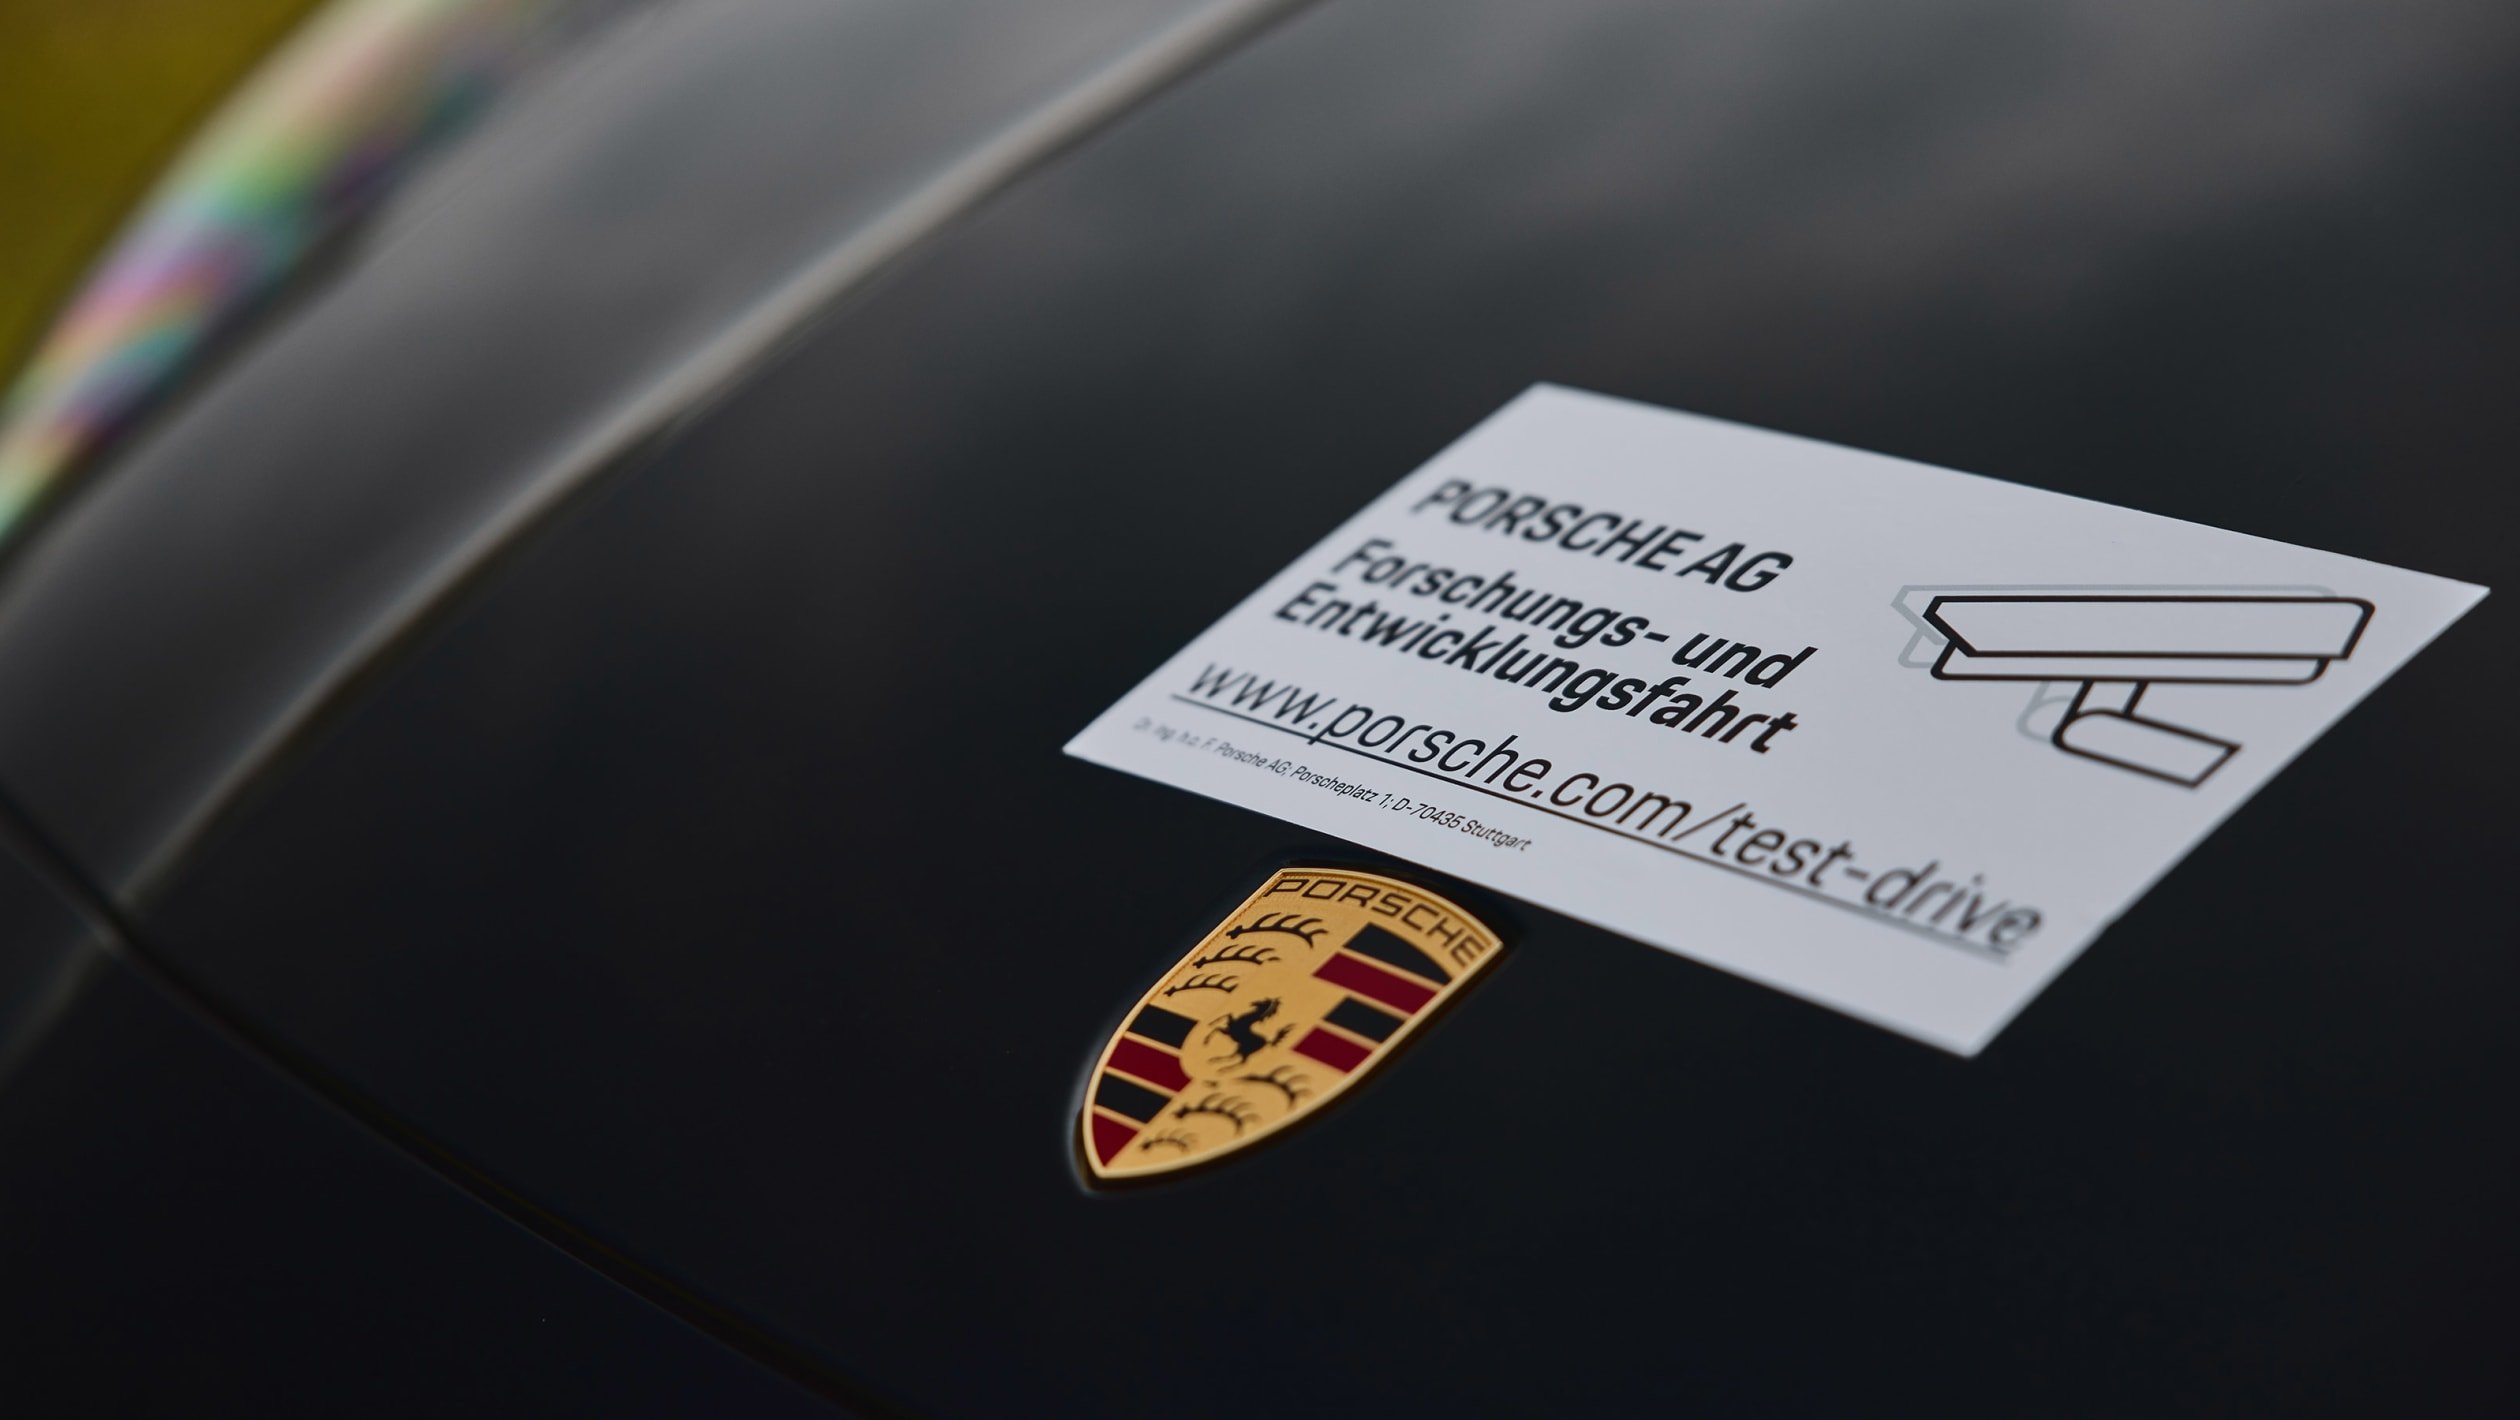 Porsche Cayenne prototype